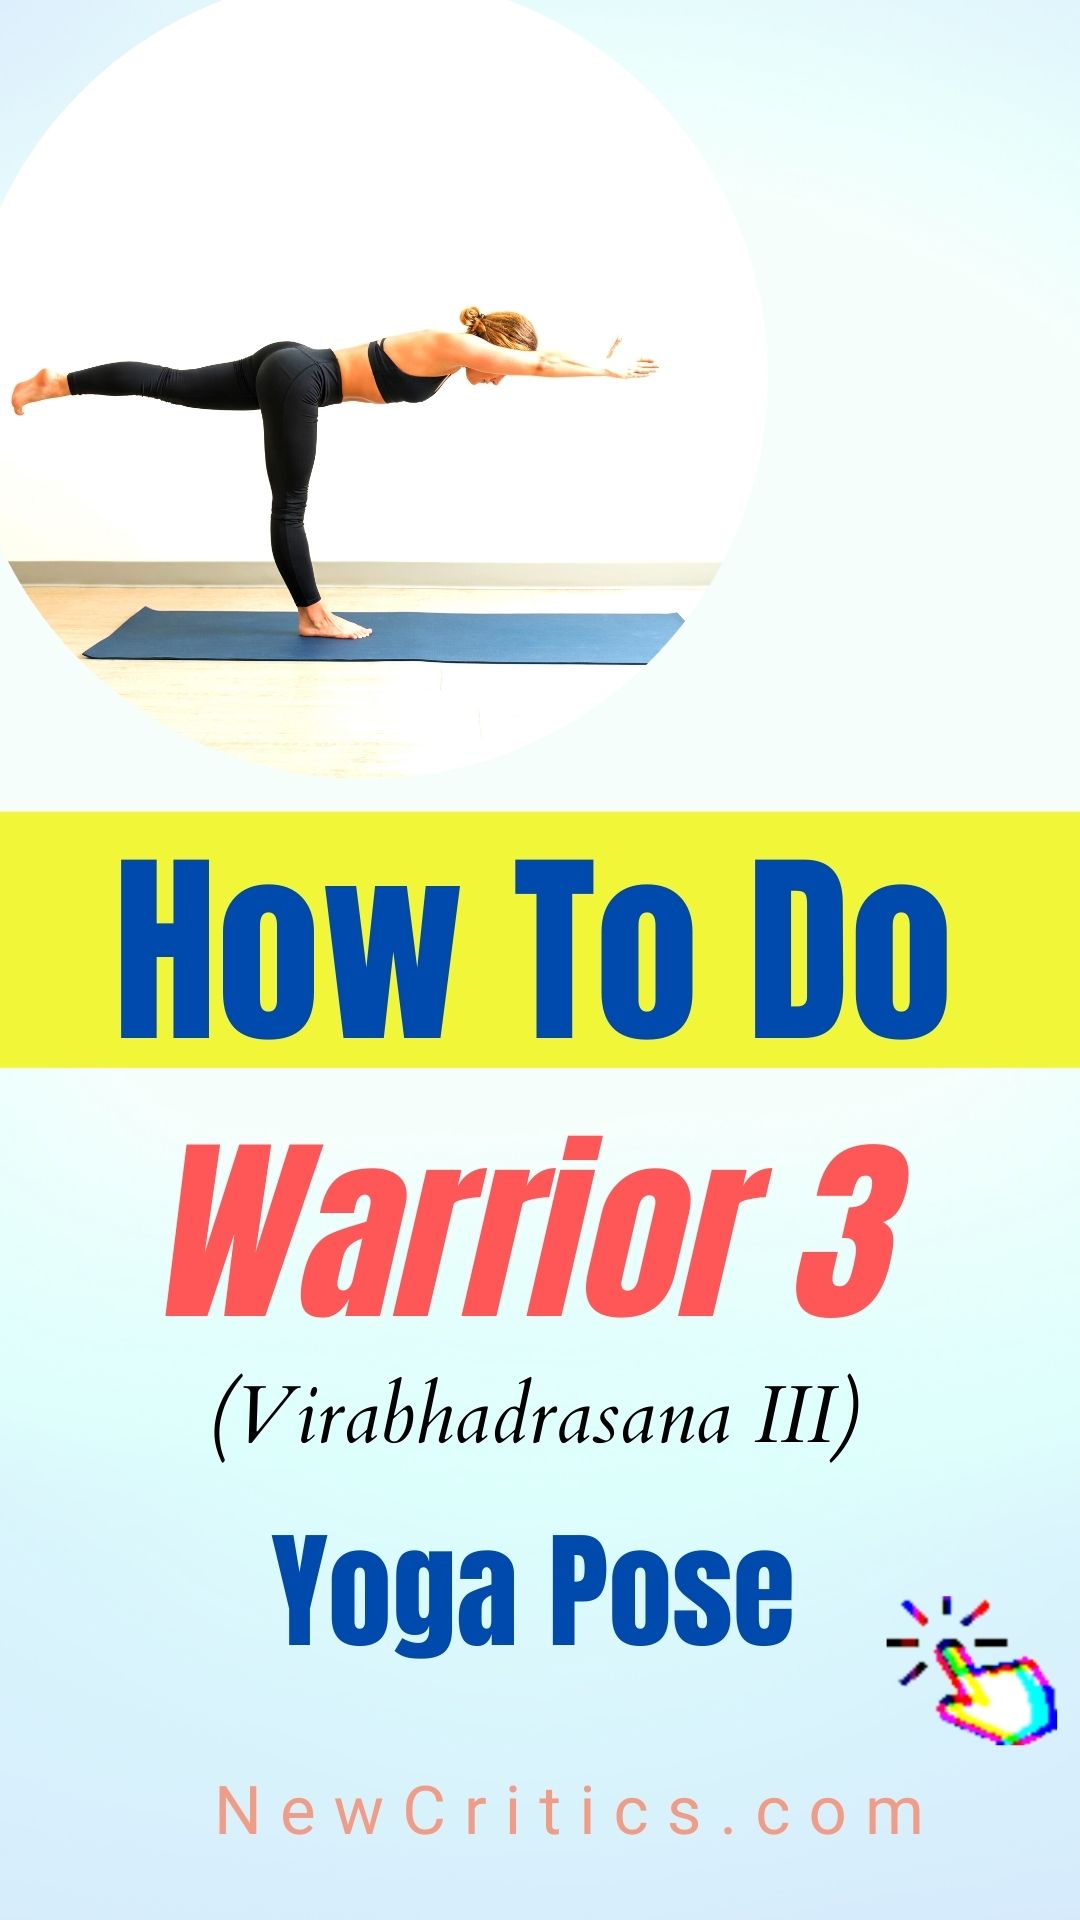 Warrior 3 Yoga Pose / Canva